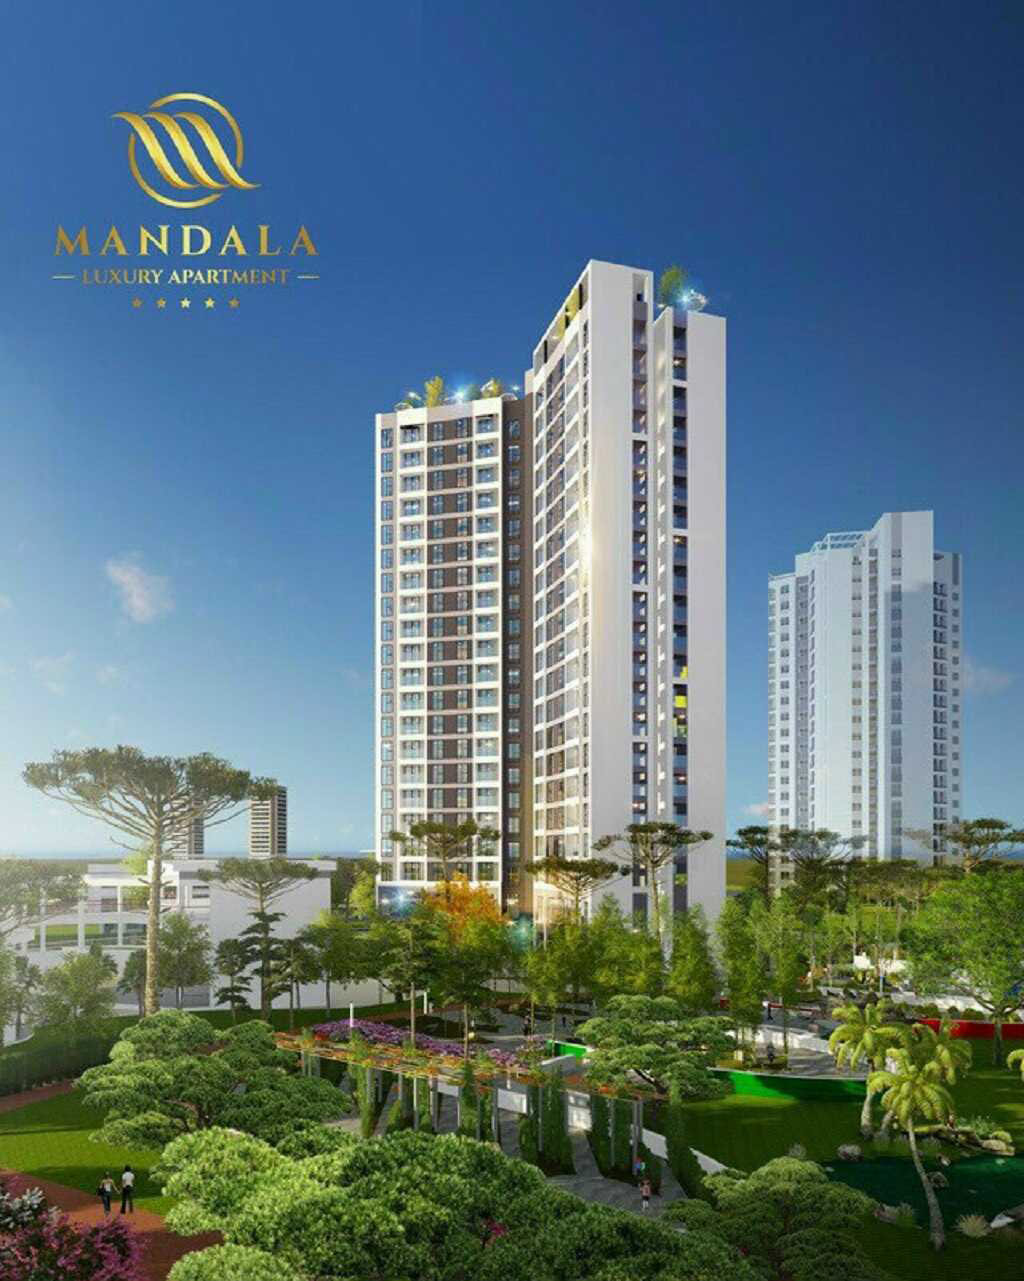 Mandala Luxury Apartment